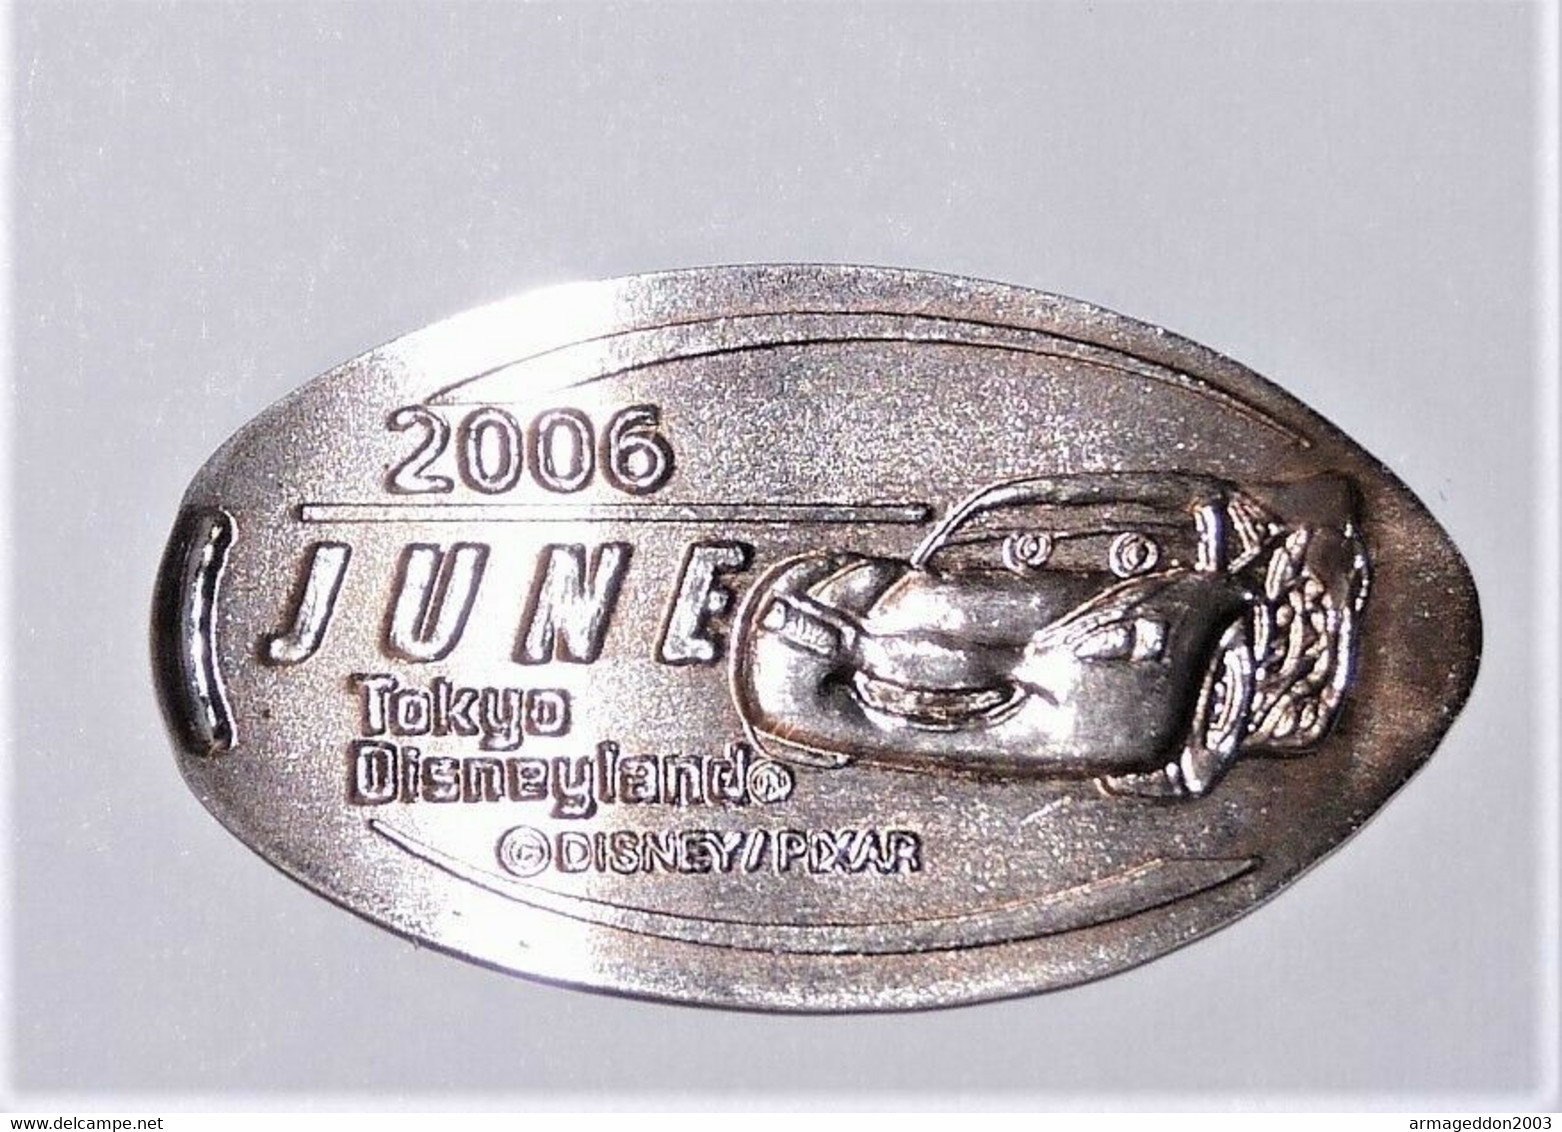 Pressed Coins Souvenir Medallion Médaillon Medaille Cars 2006 Pixar Disney - Monedas Elongadas (elongated Coins)